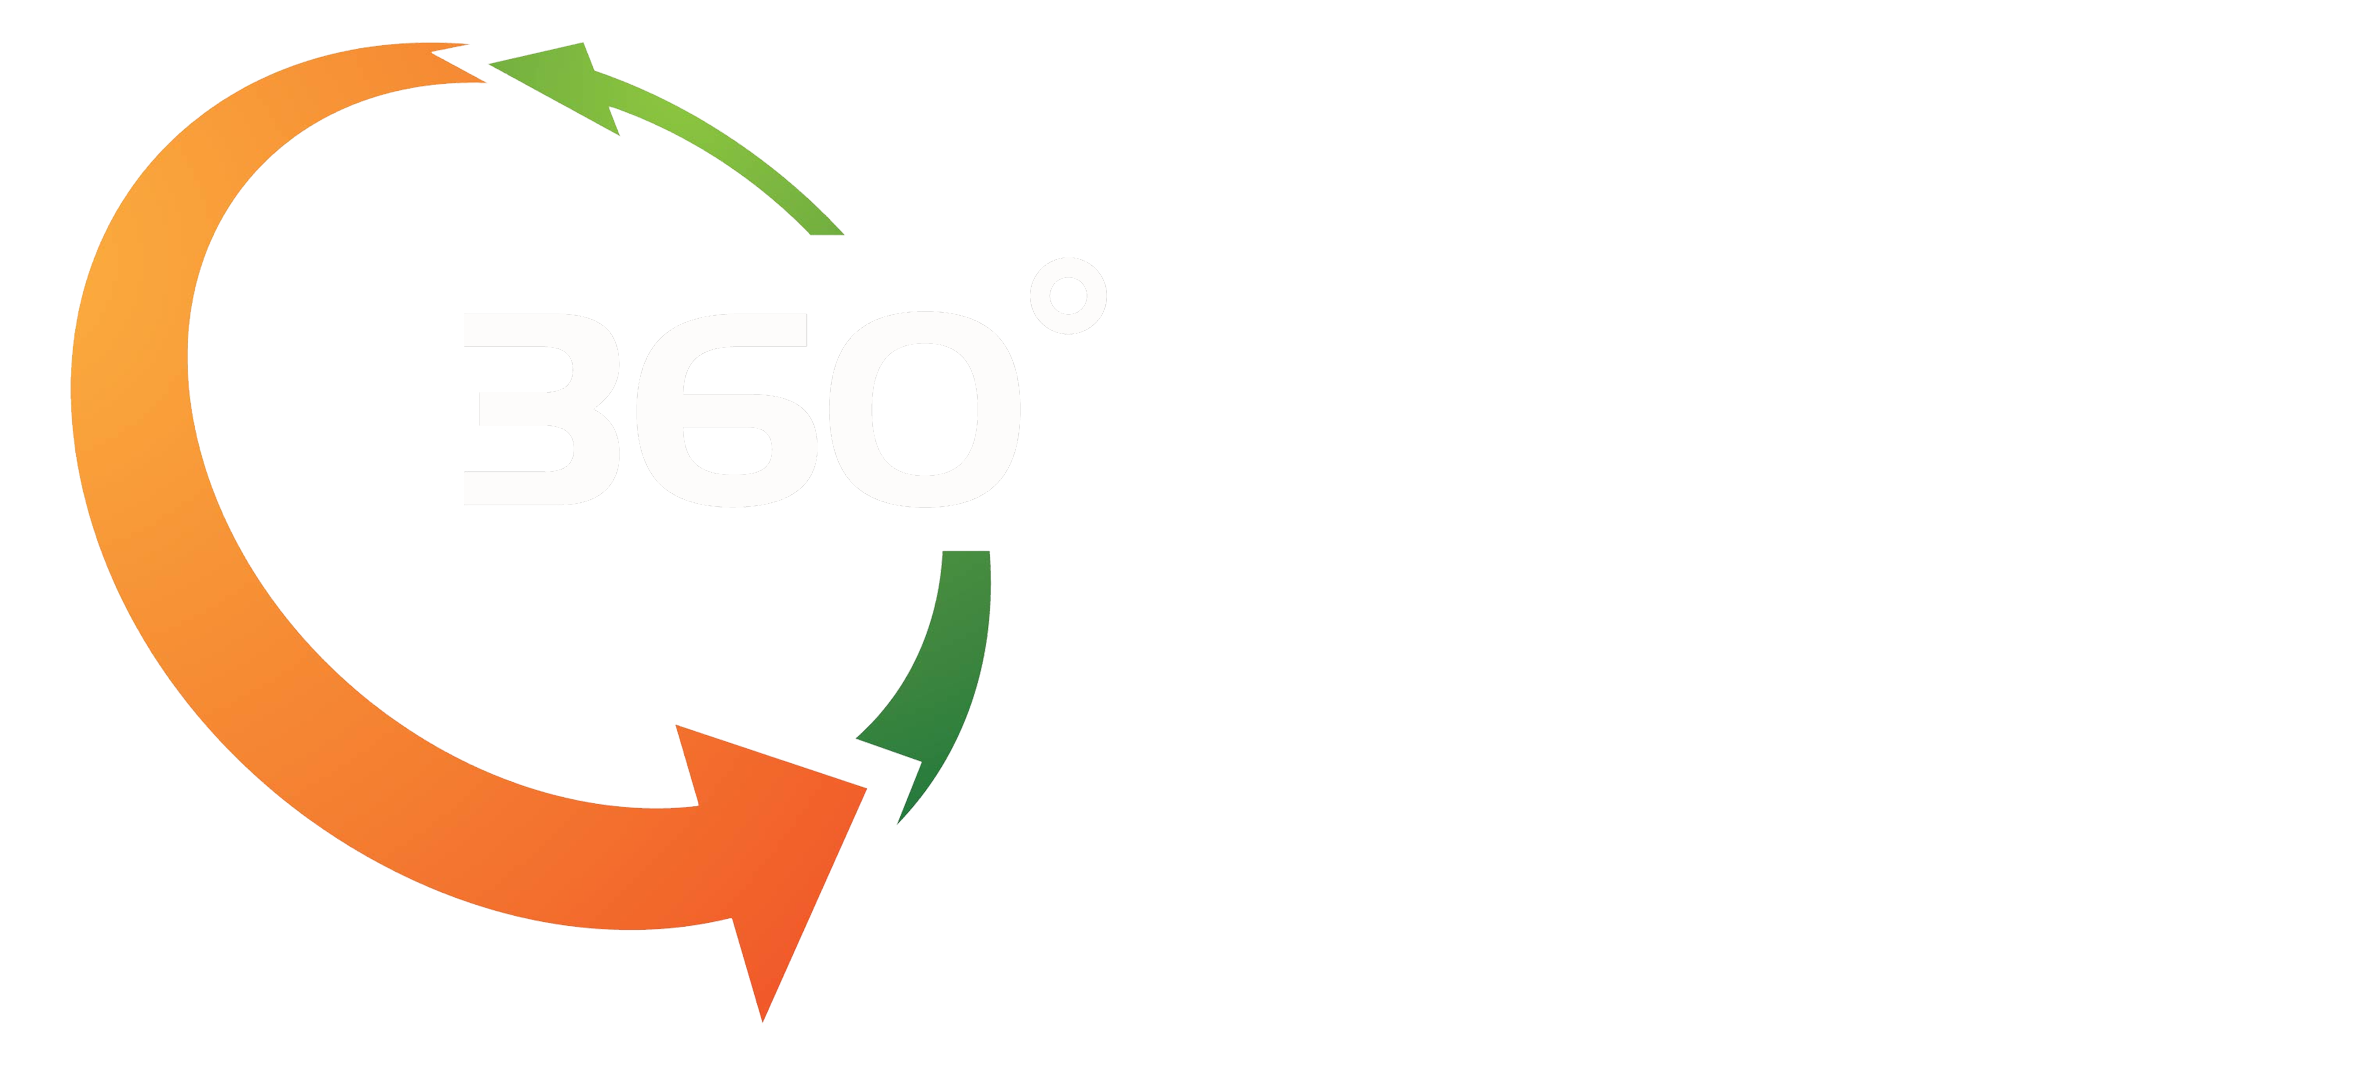 F8 Tours